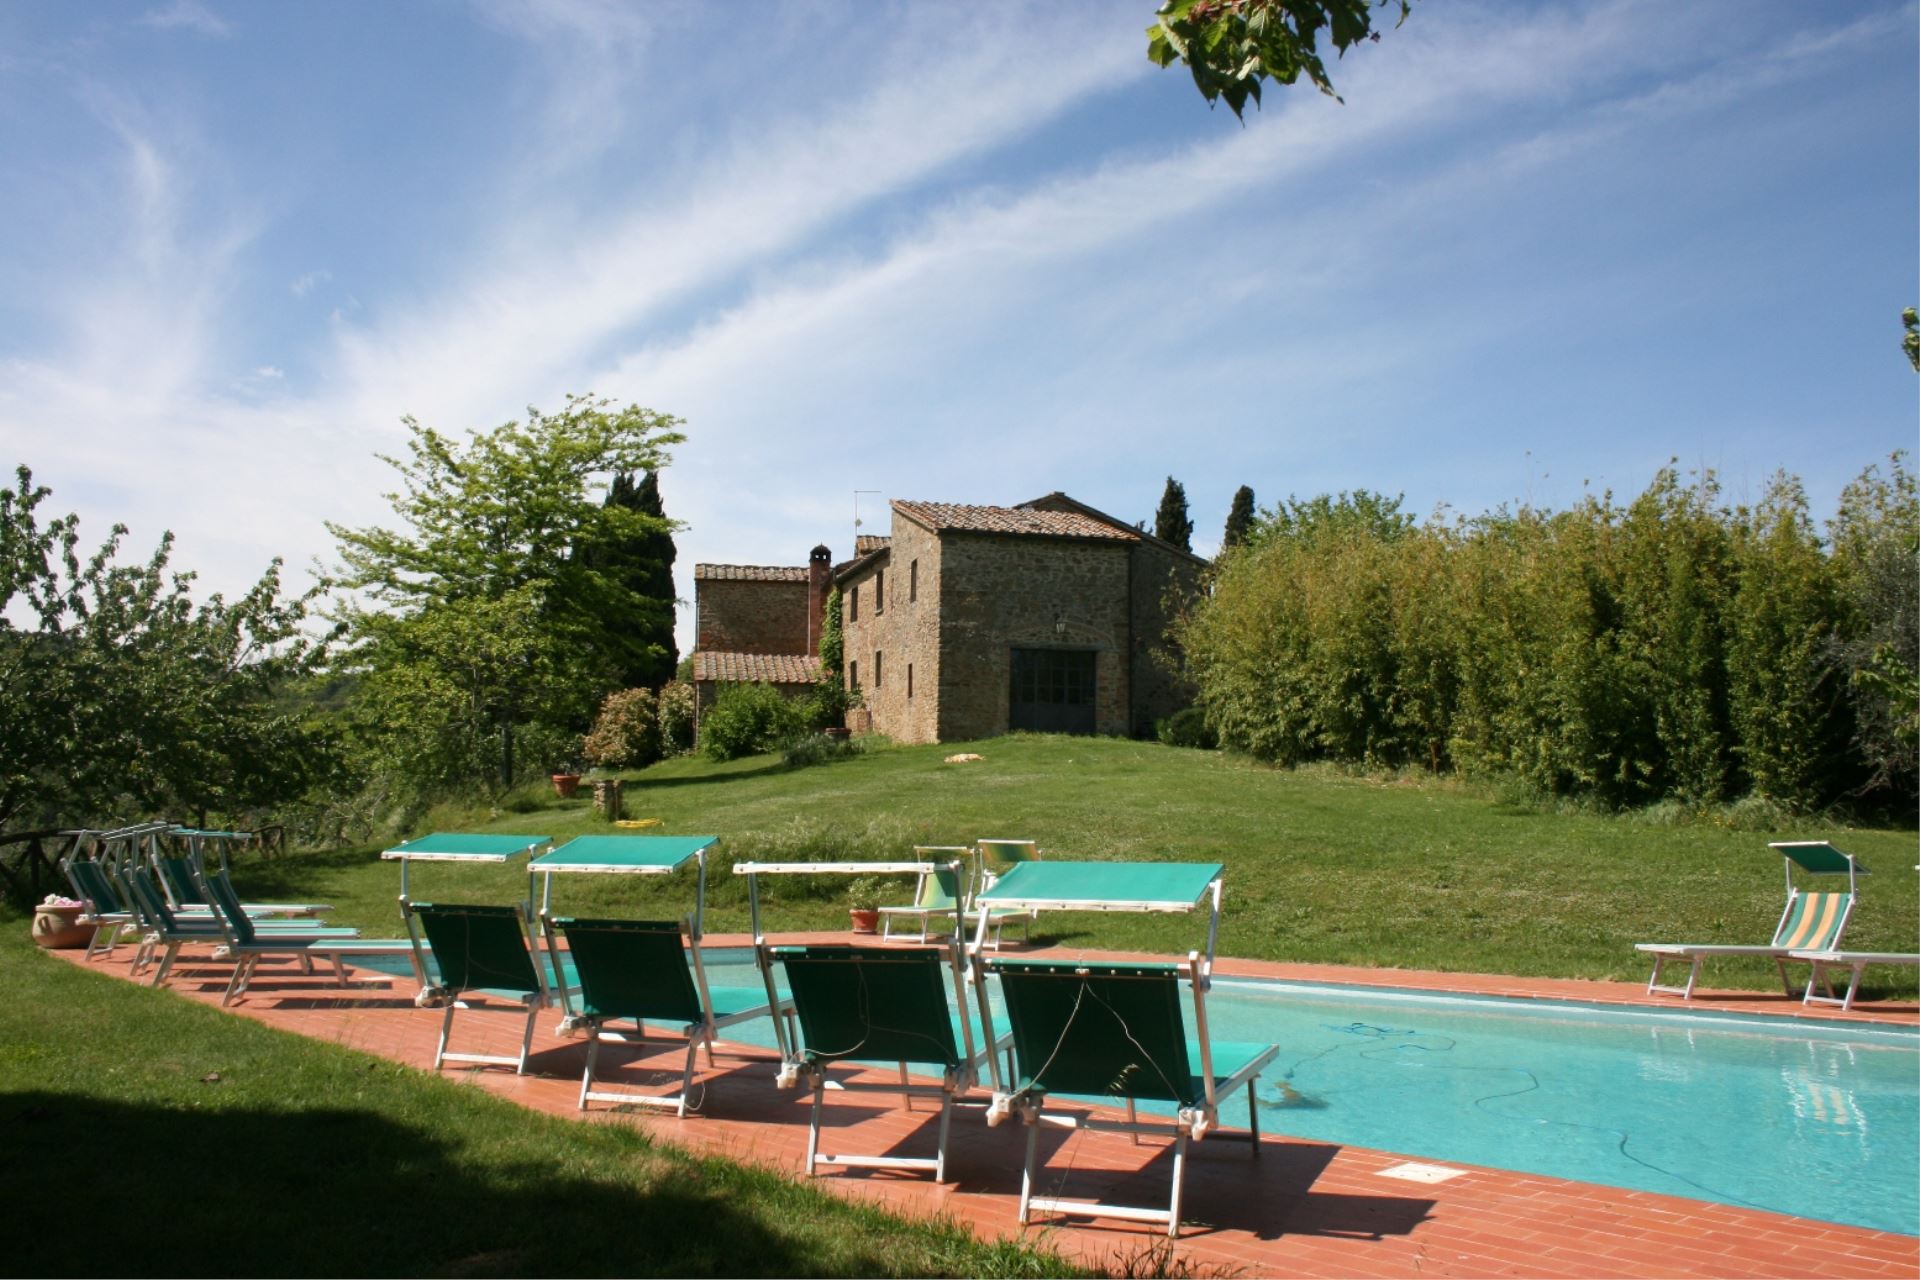 456_2d48c2e_Agriturismo Bevignano, Arezzo Siena, zwembad, tennisbaan, olijfolie, kindvriendelijk (1)